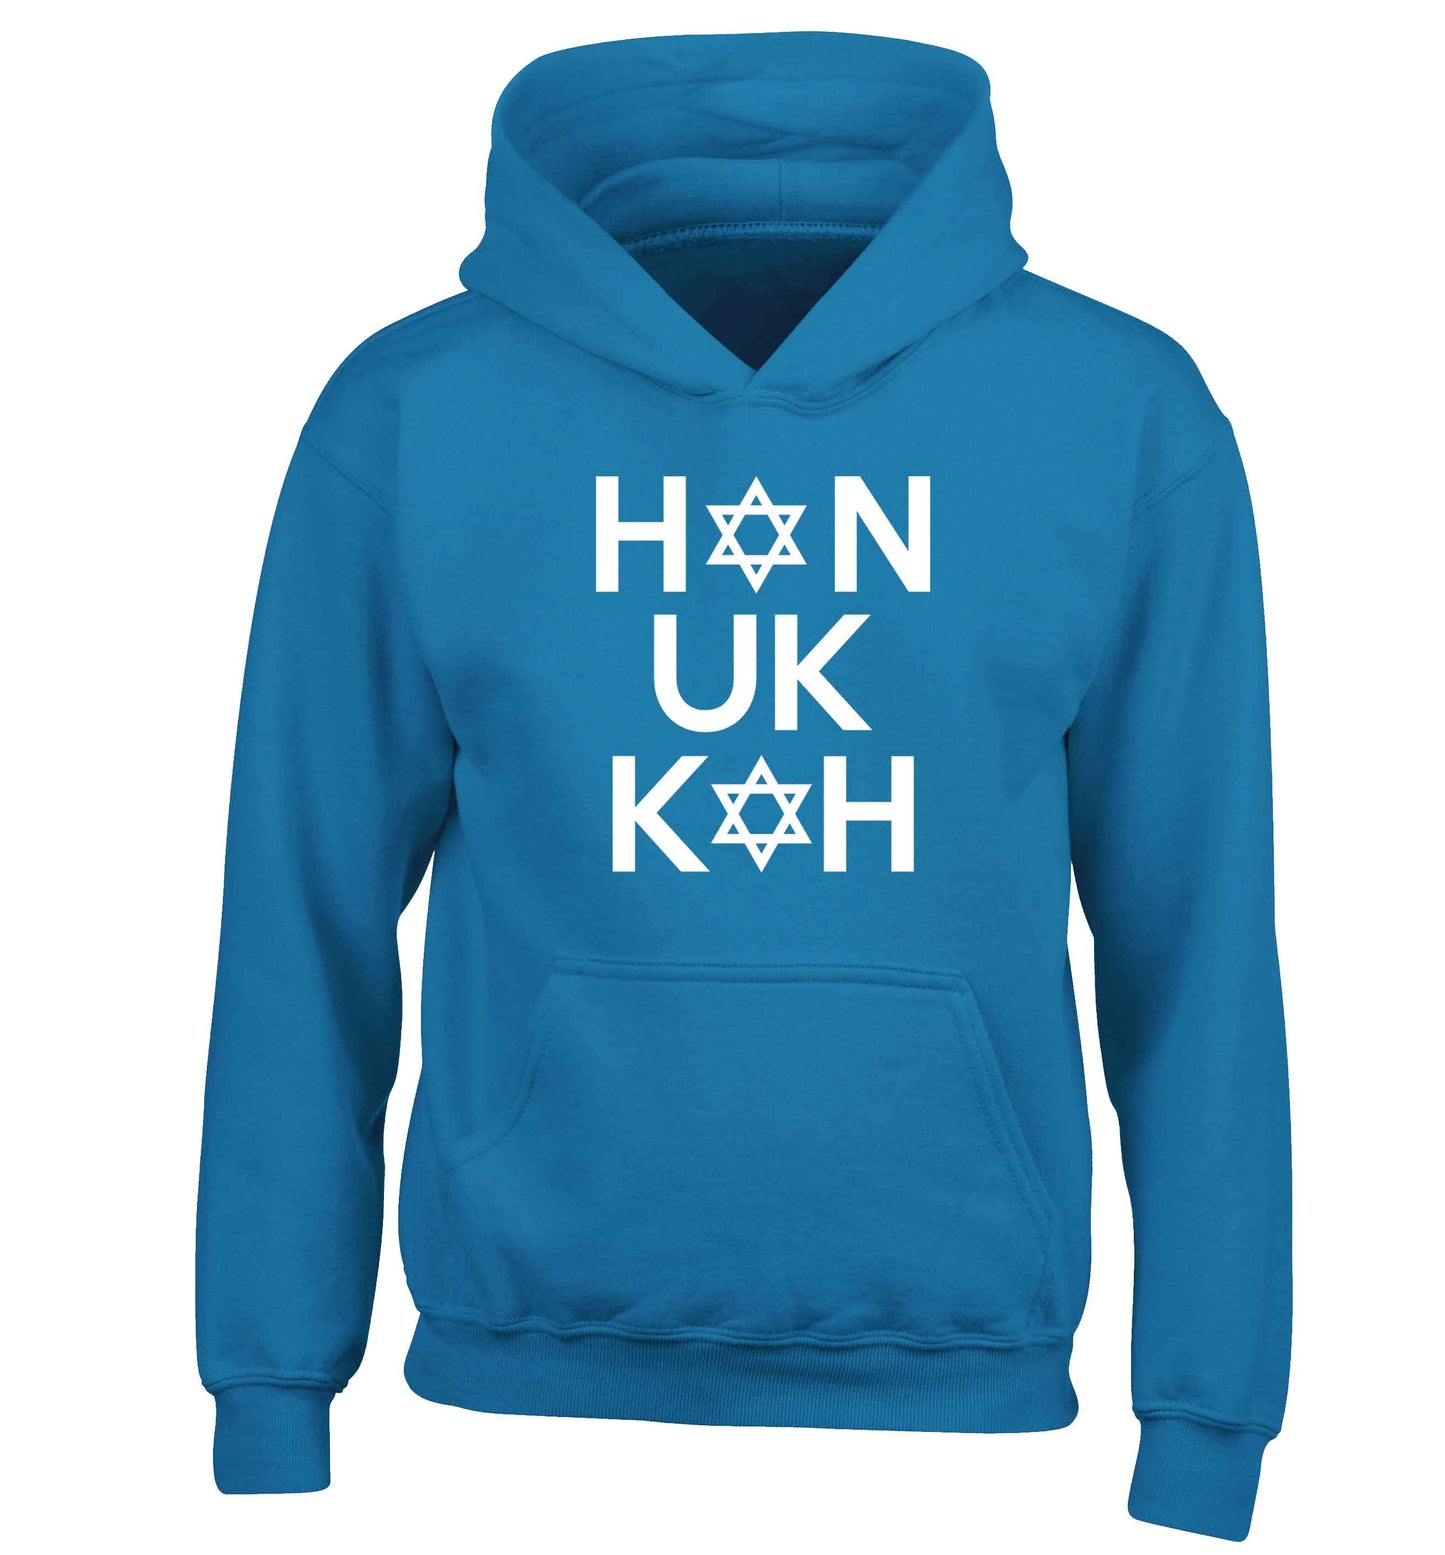 Han uk kah  Hanukkah star of david children's blue hoodie 12-13 Years